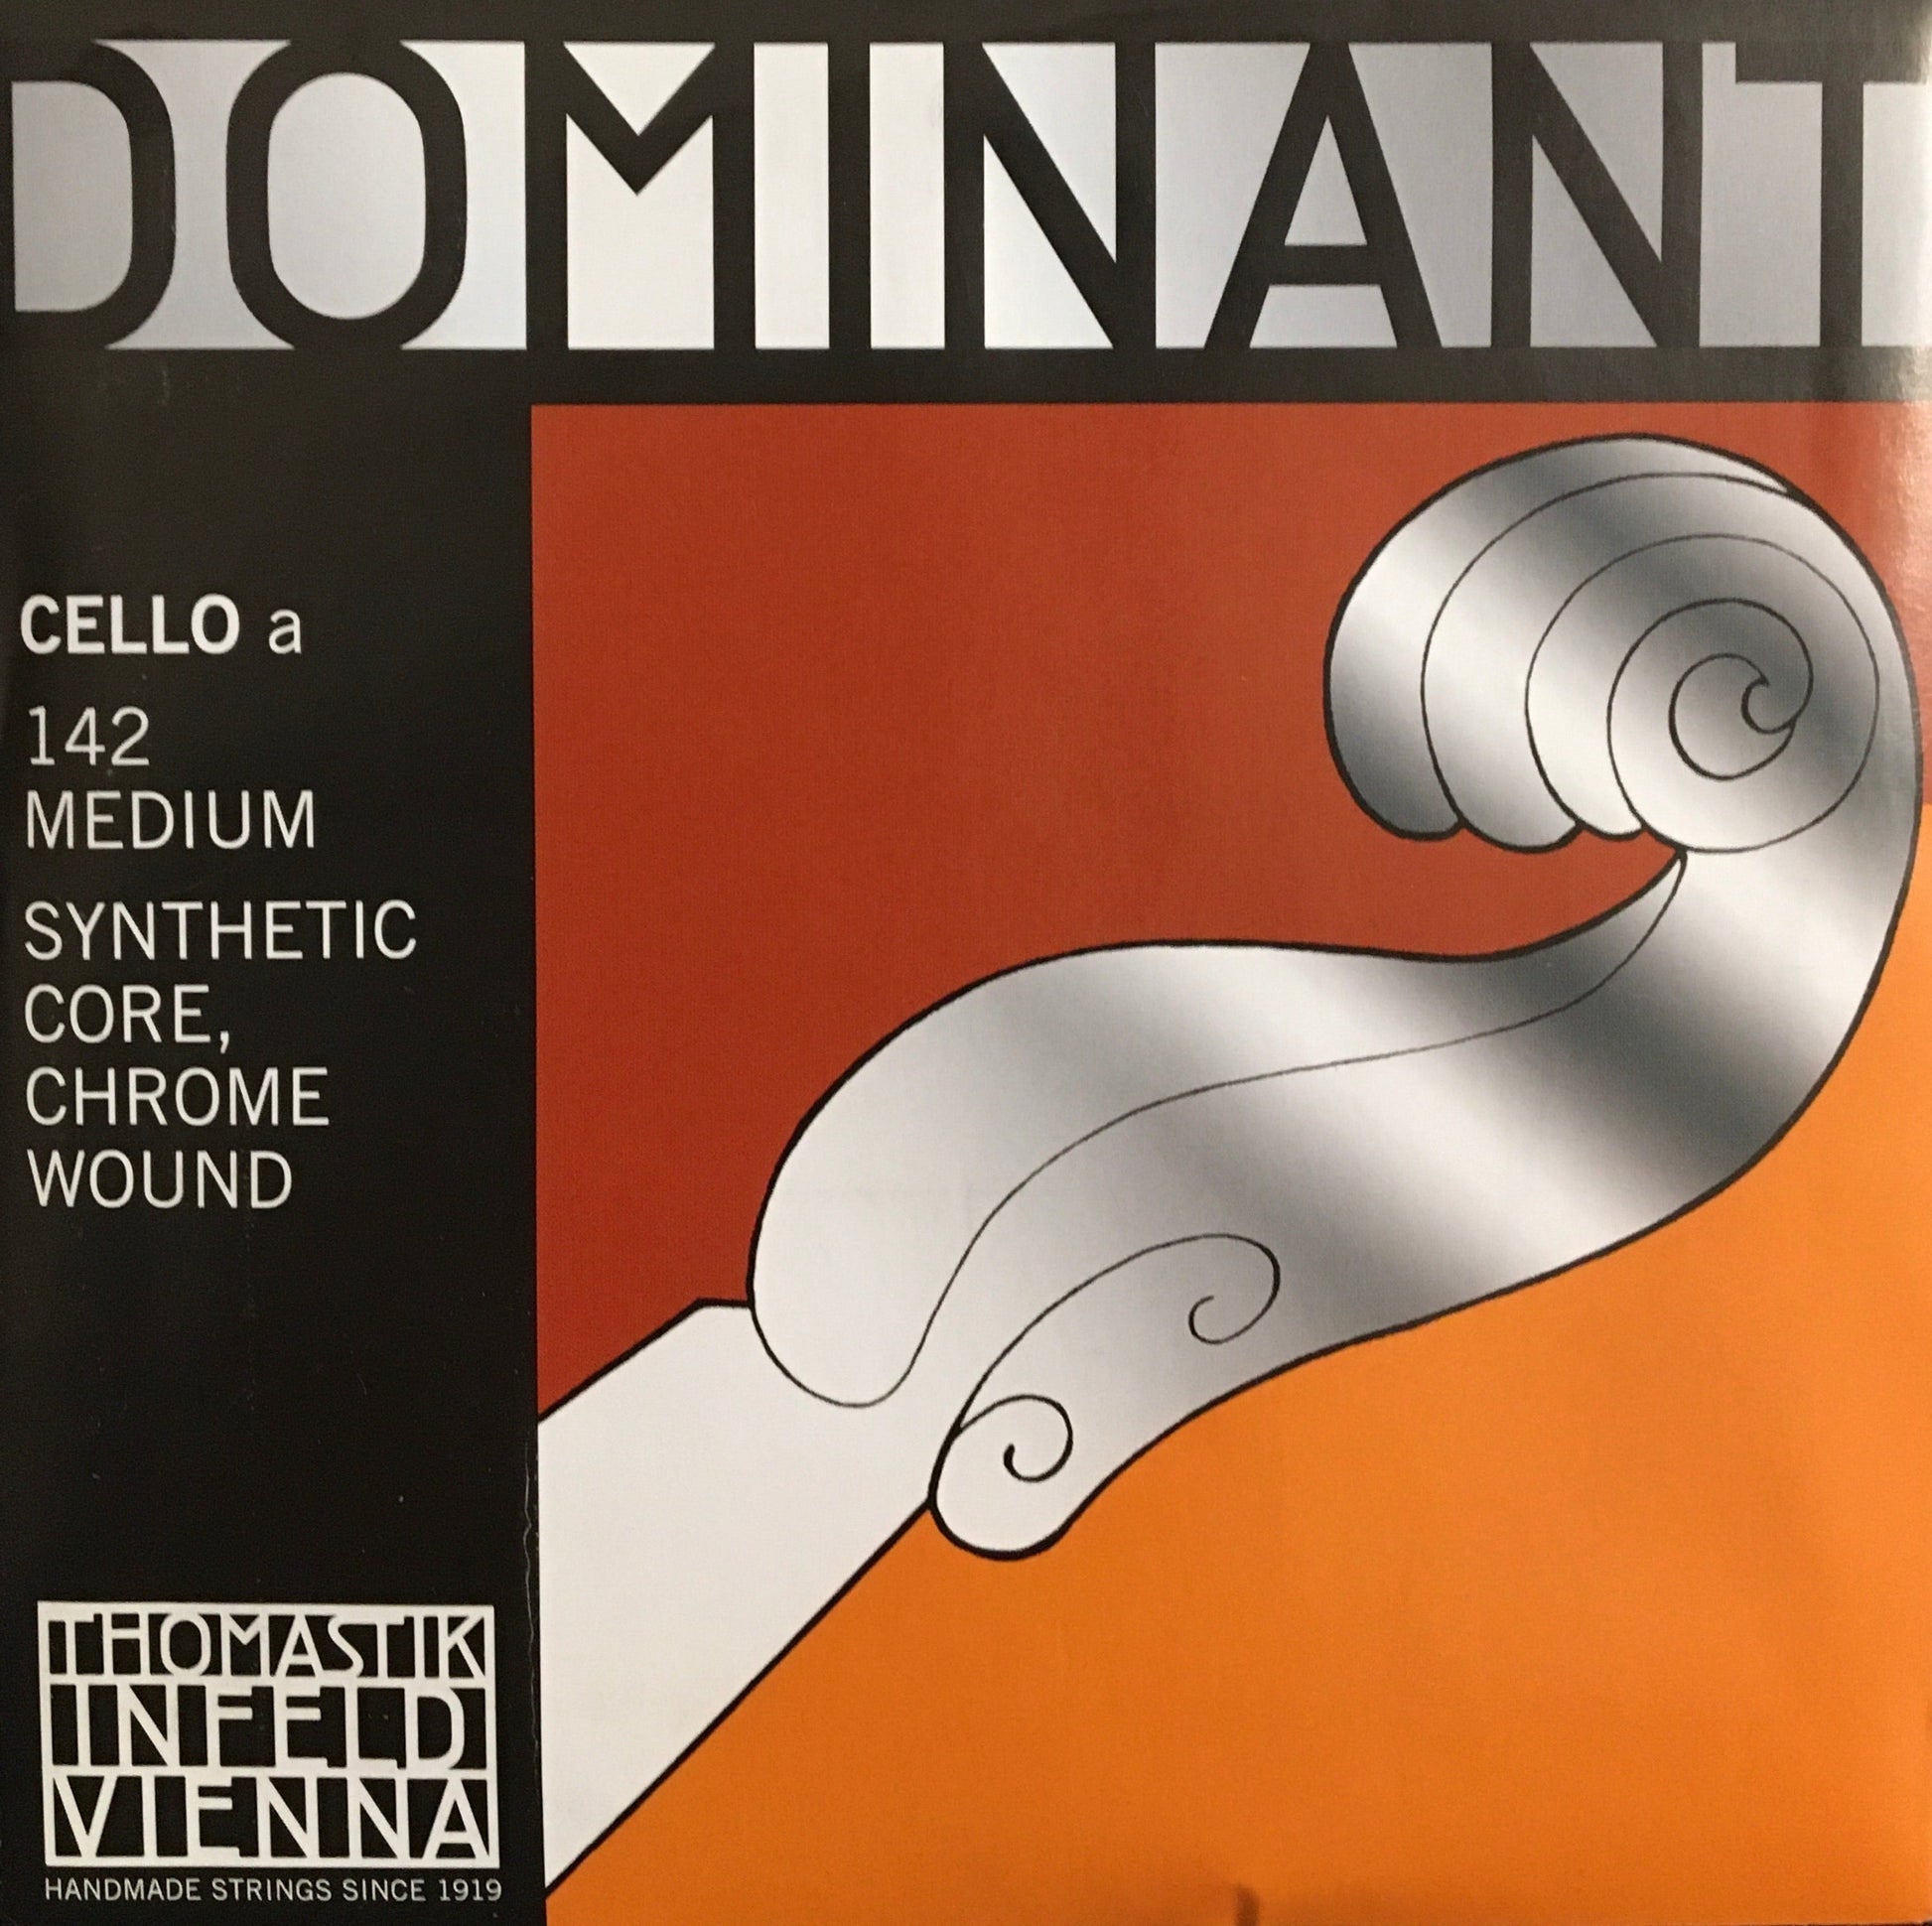 Thomastik-Infeld Dominant Cello Strings - Medium, 4/4 Strings, Bows & More